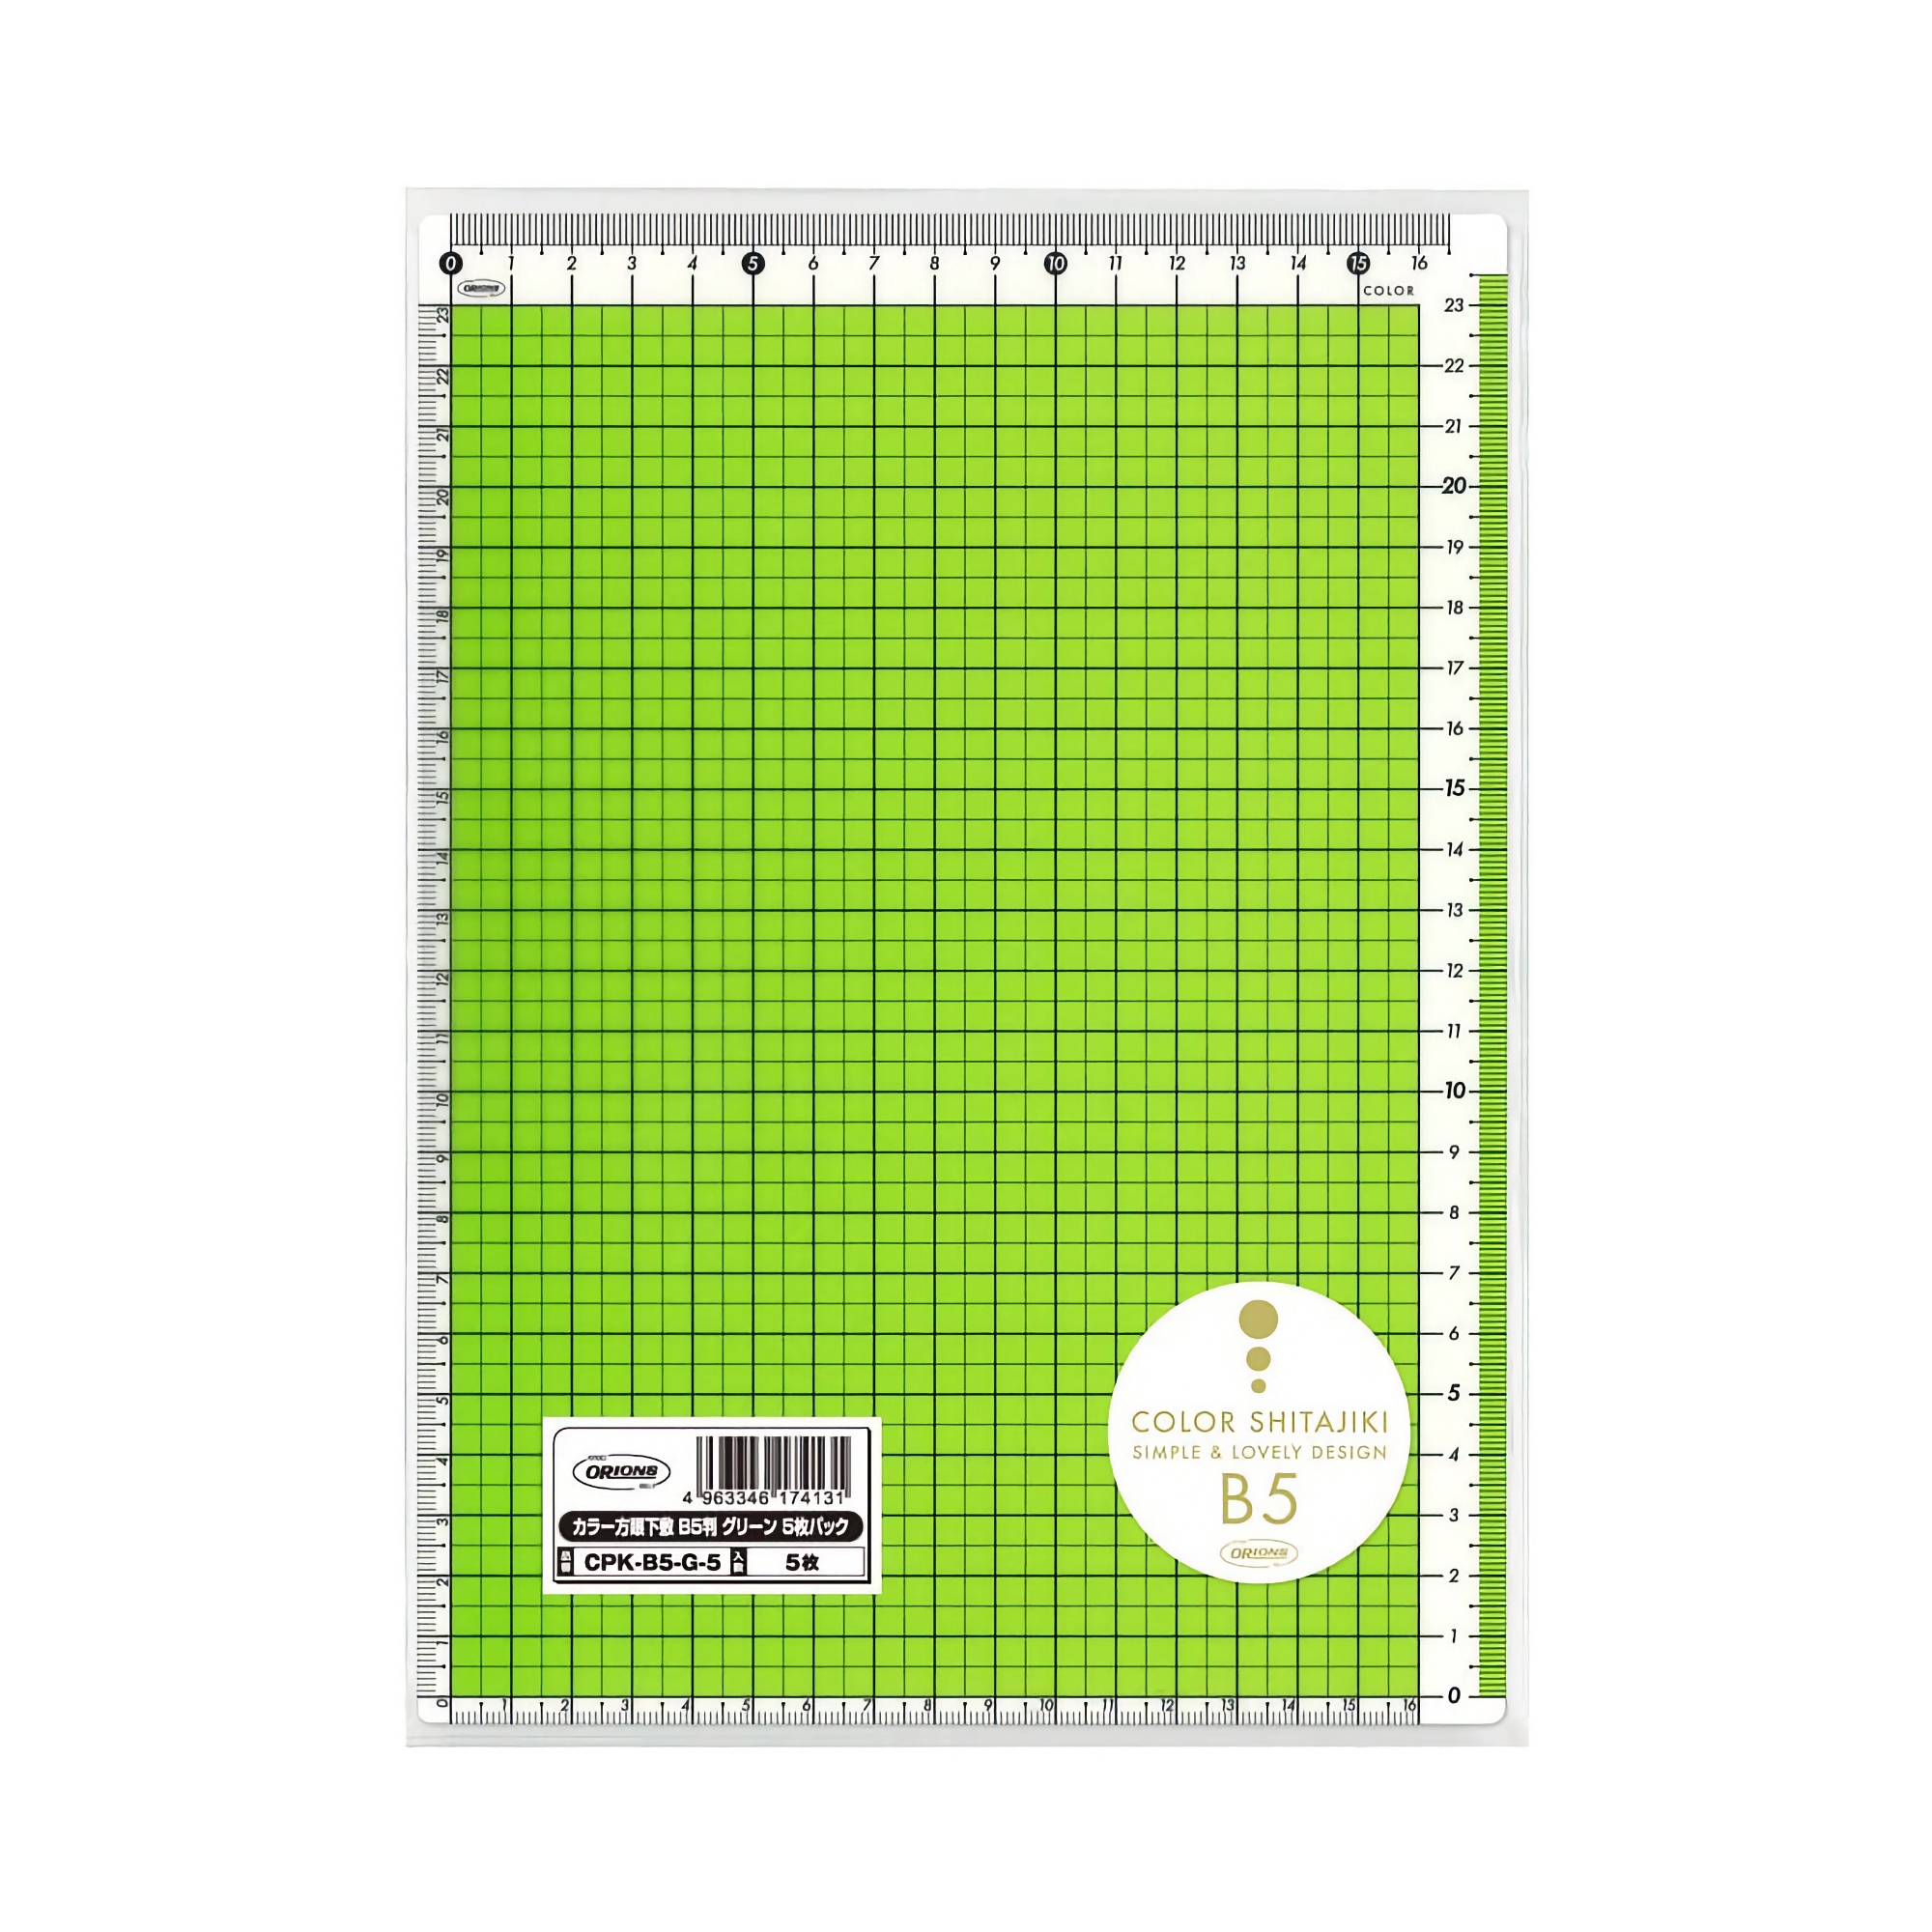 Kyoei Orions Shitajiki Pencil Board B5 Color Grid